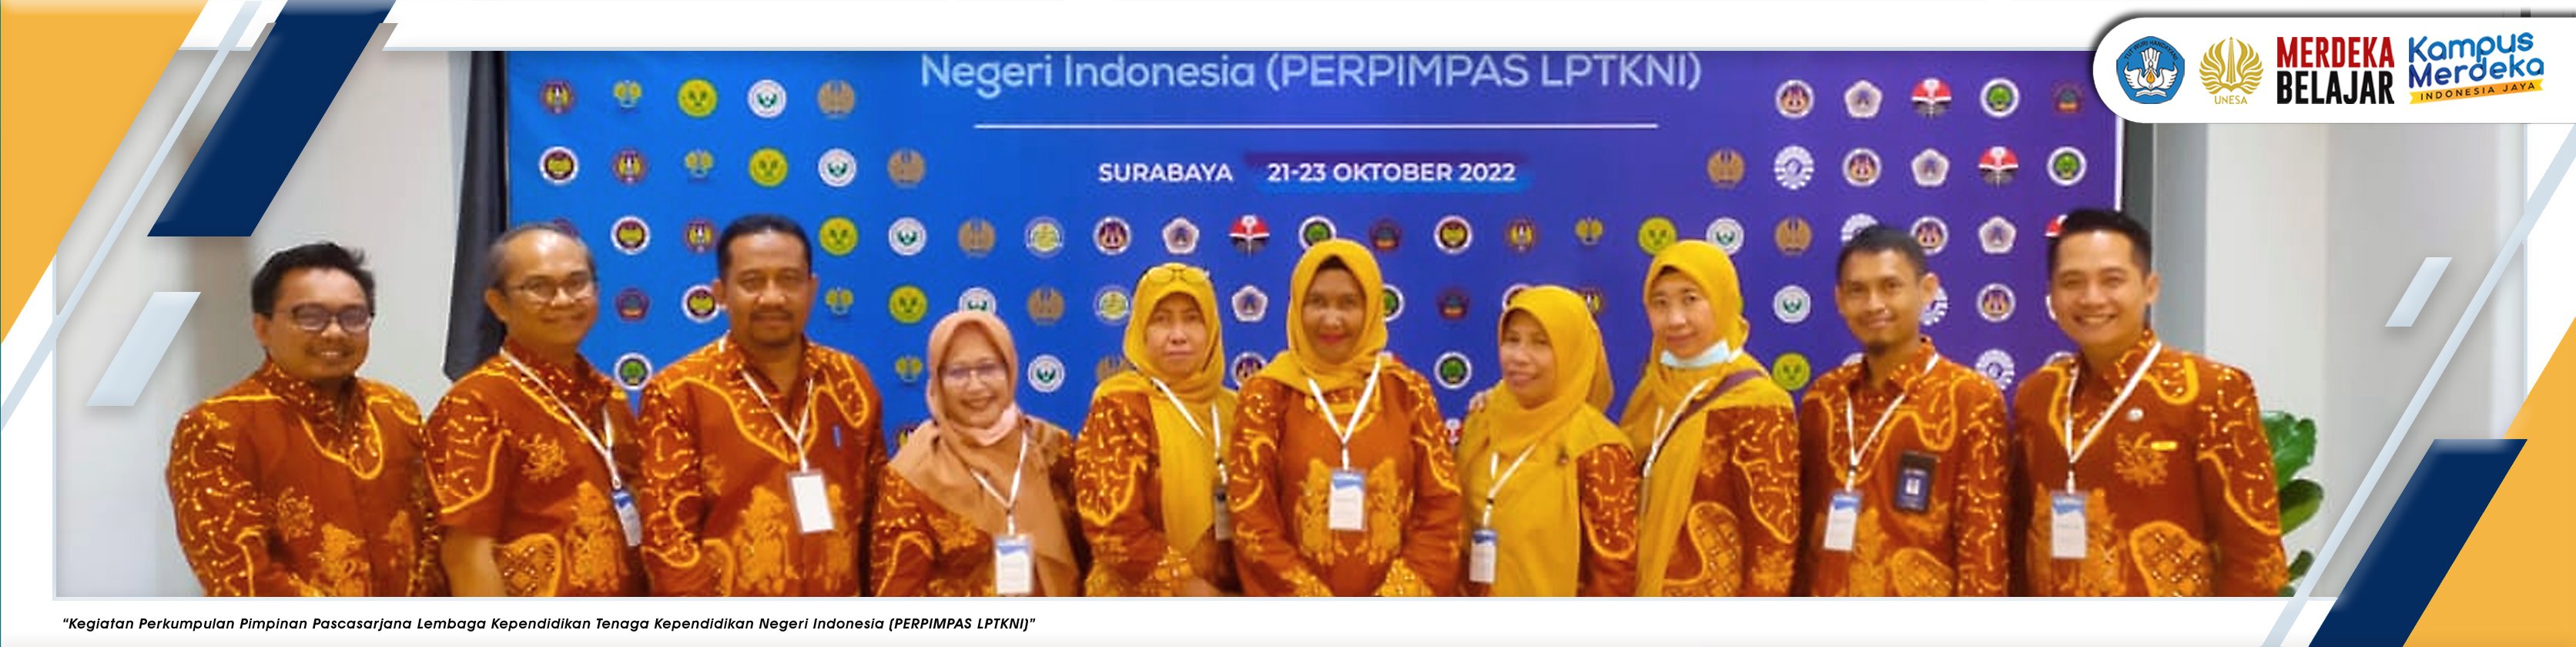 Kegiatan Perkumpulan Pimpinan Pascasarjana Lembaga Kependidikan Tenaga Kependidikan Negeri Indonesia (PERPIMPAS LPTKNI)